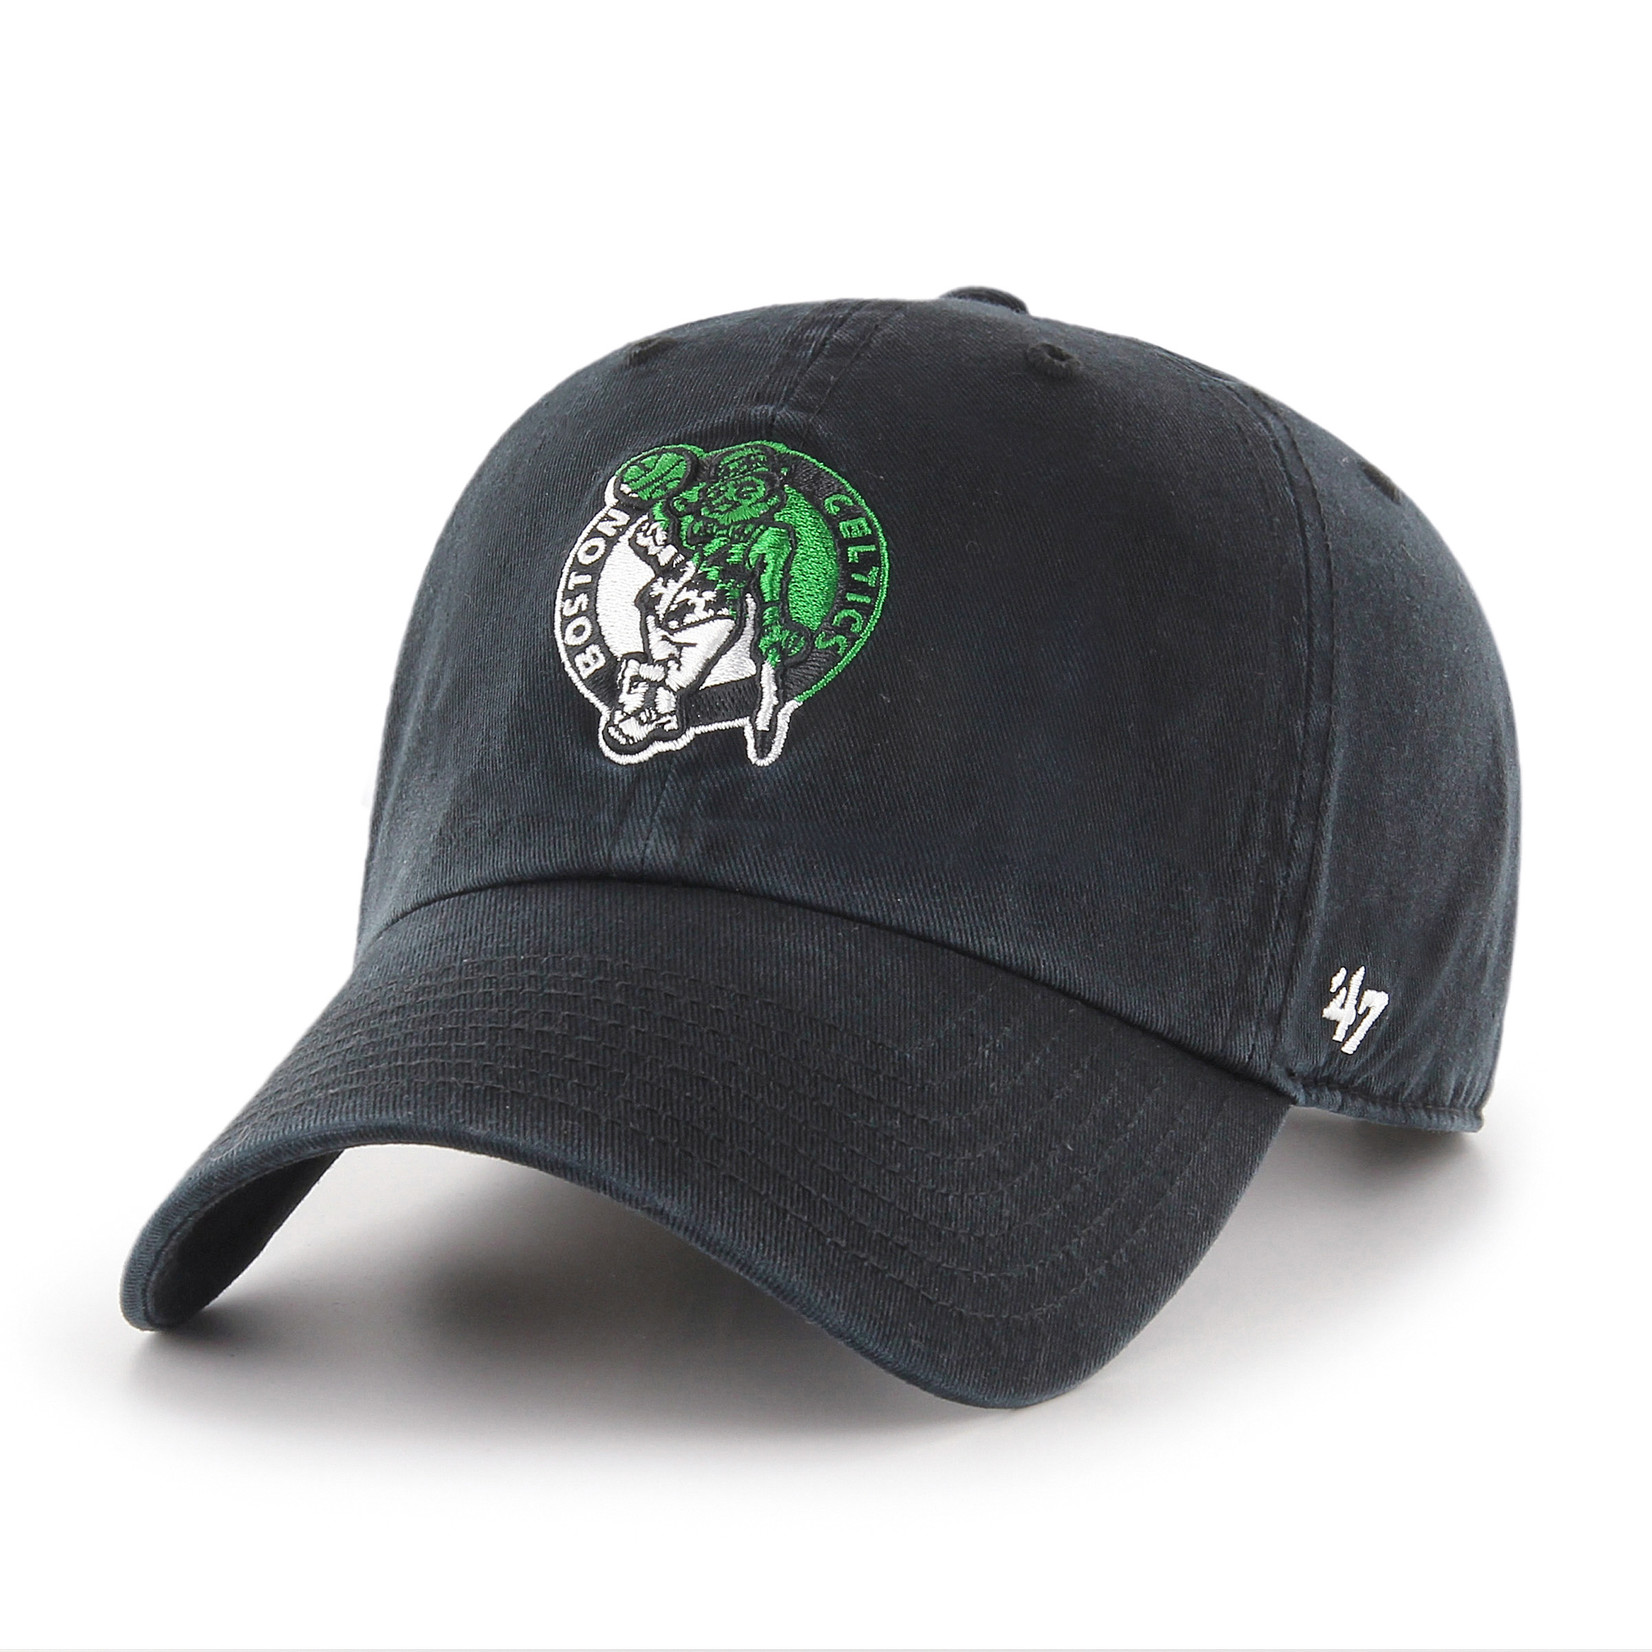 '47 Brand Celtics Black Hat - Split Shot